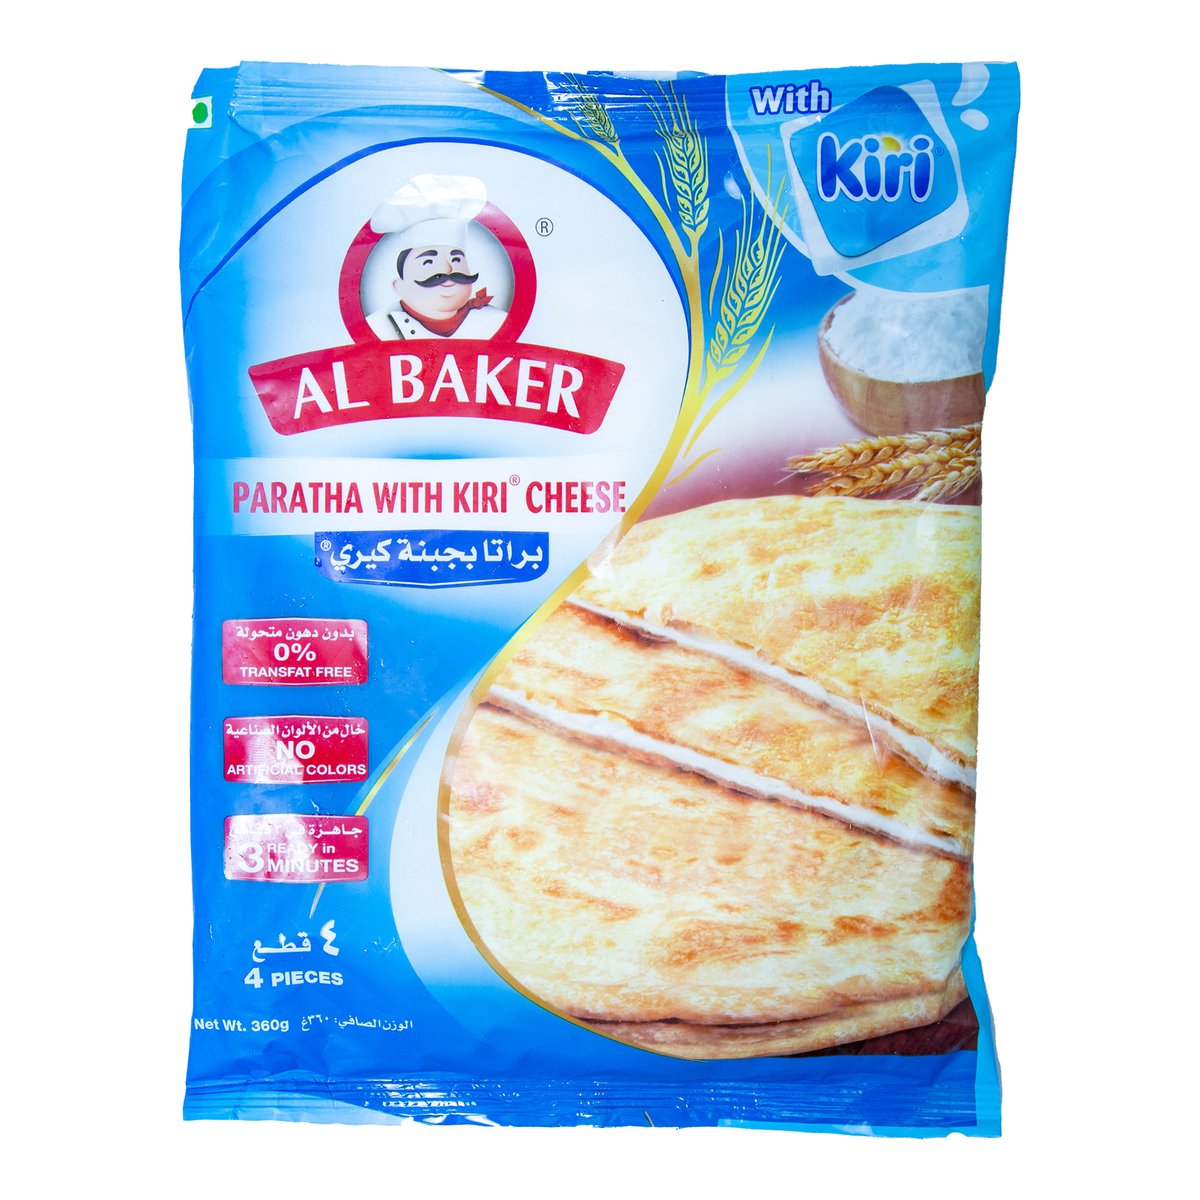 Al Baker Paratha With Kiri Cheese, 4 pcs